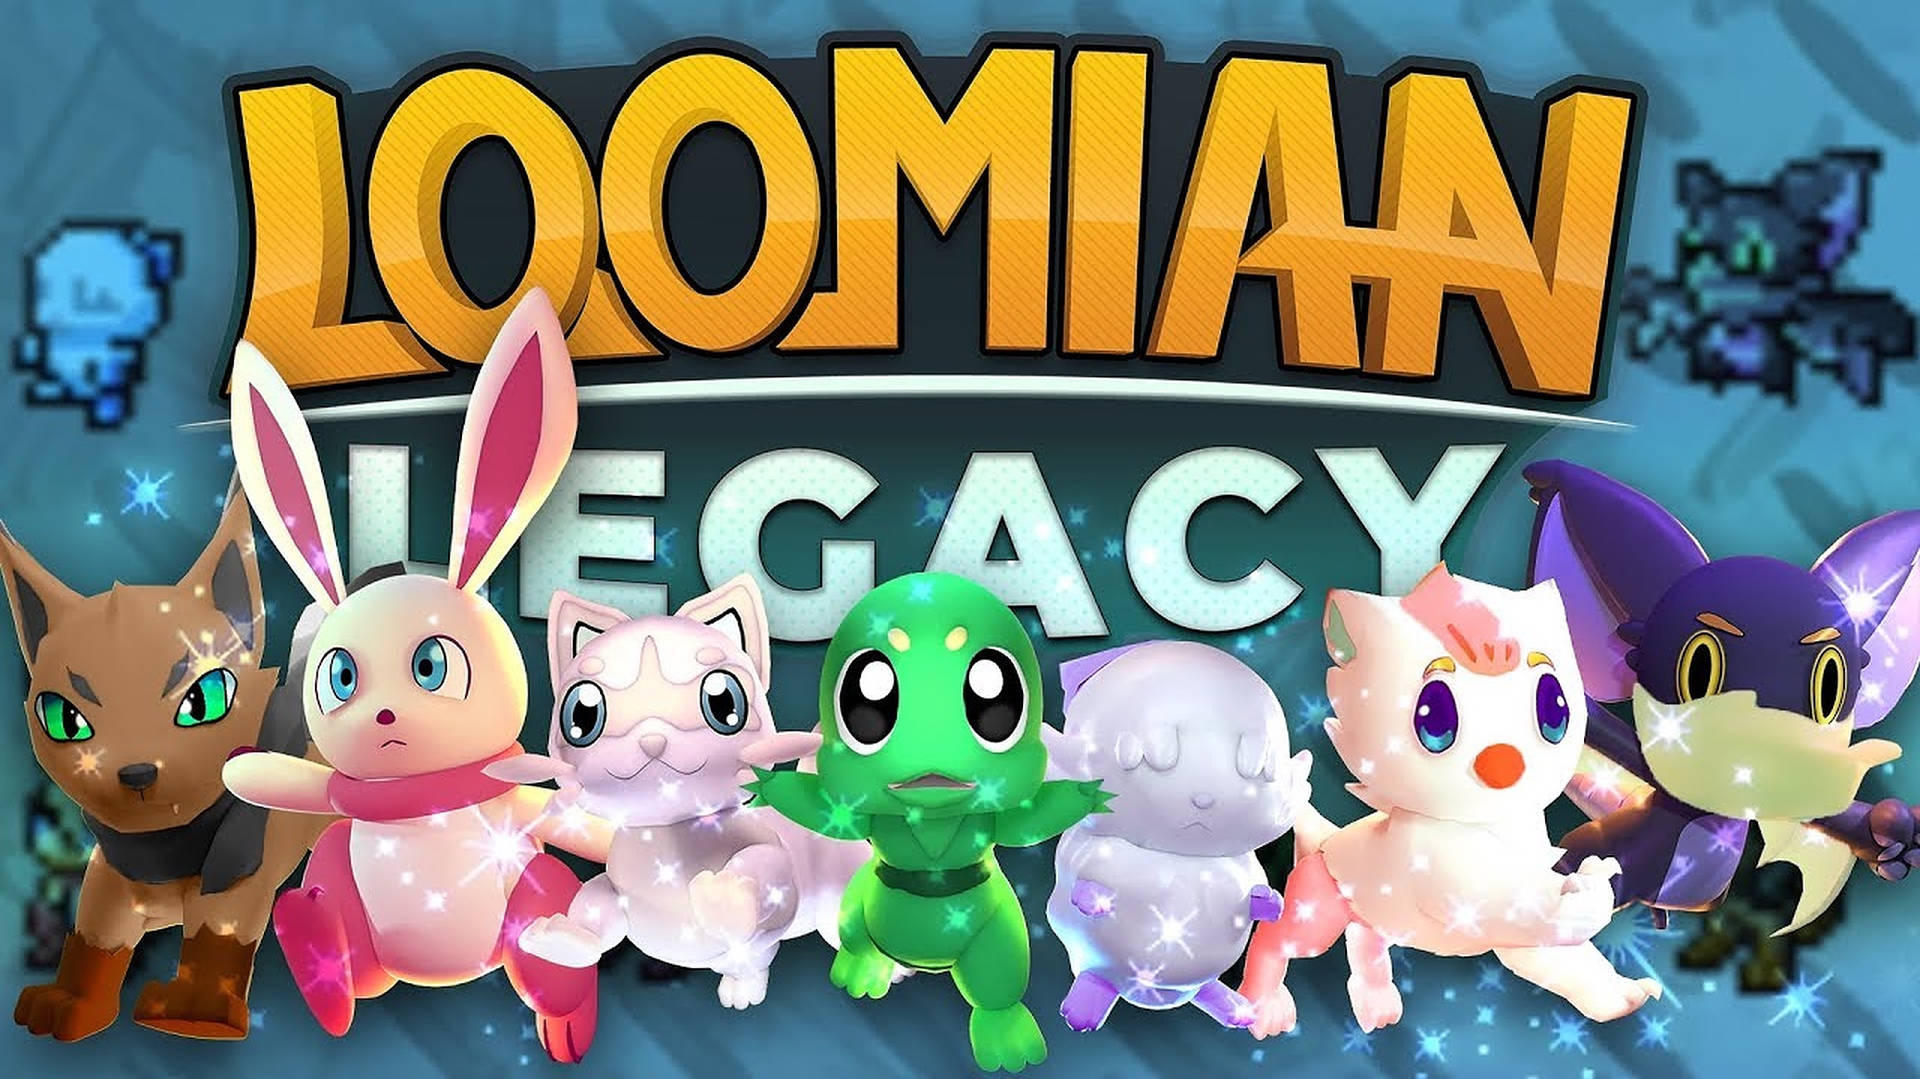 Loomian Legacy Cute Poster